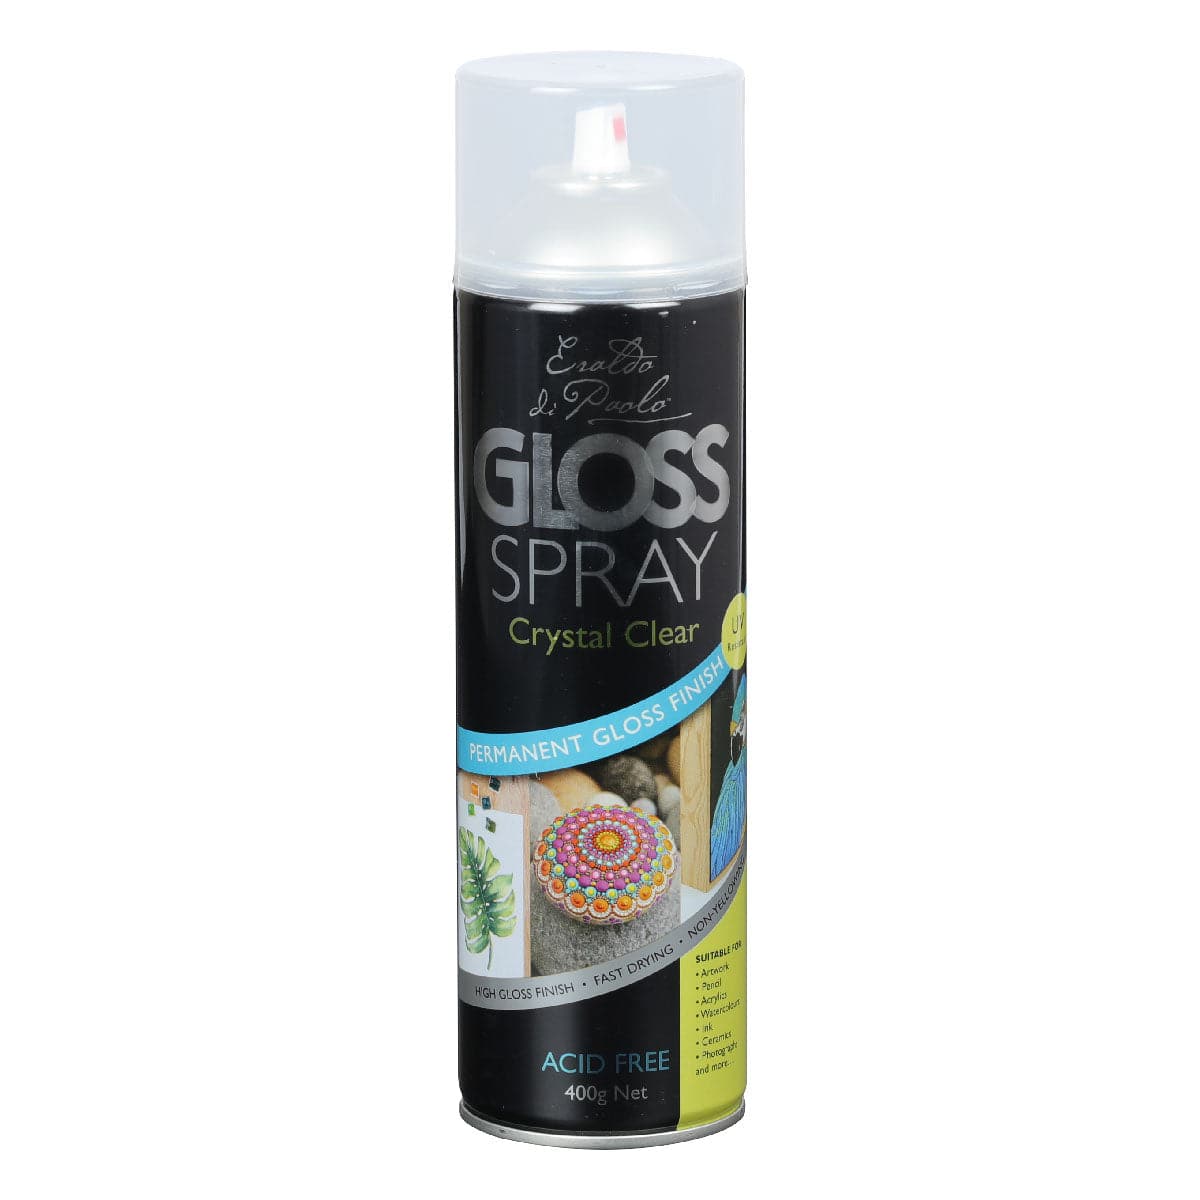 Image of Eraldo Clear Gloss Spray 400g